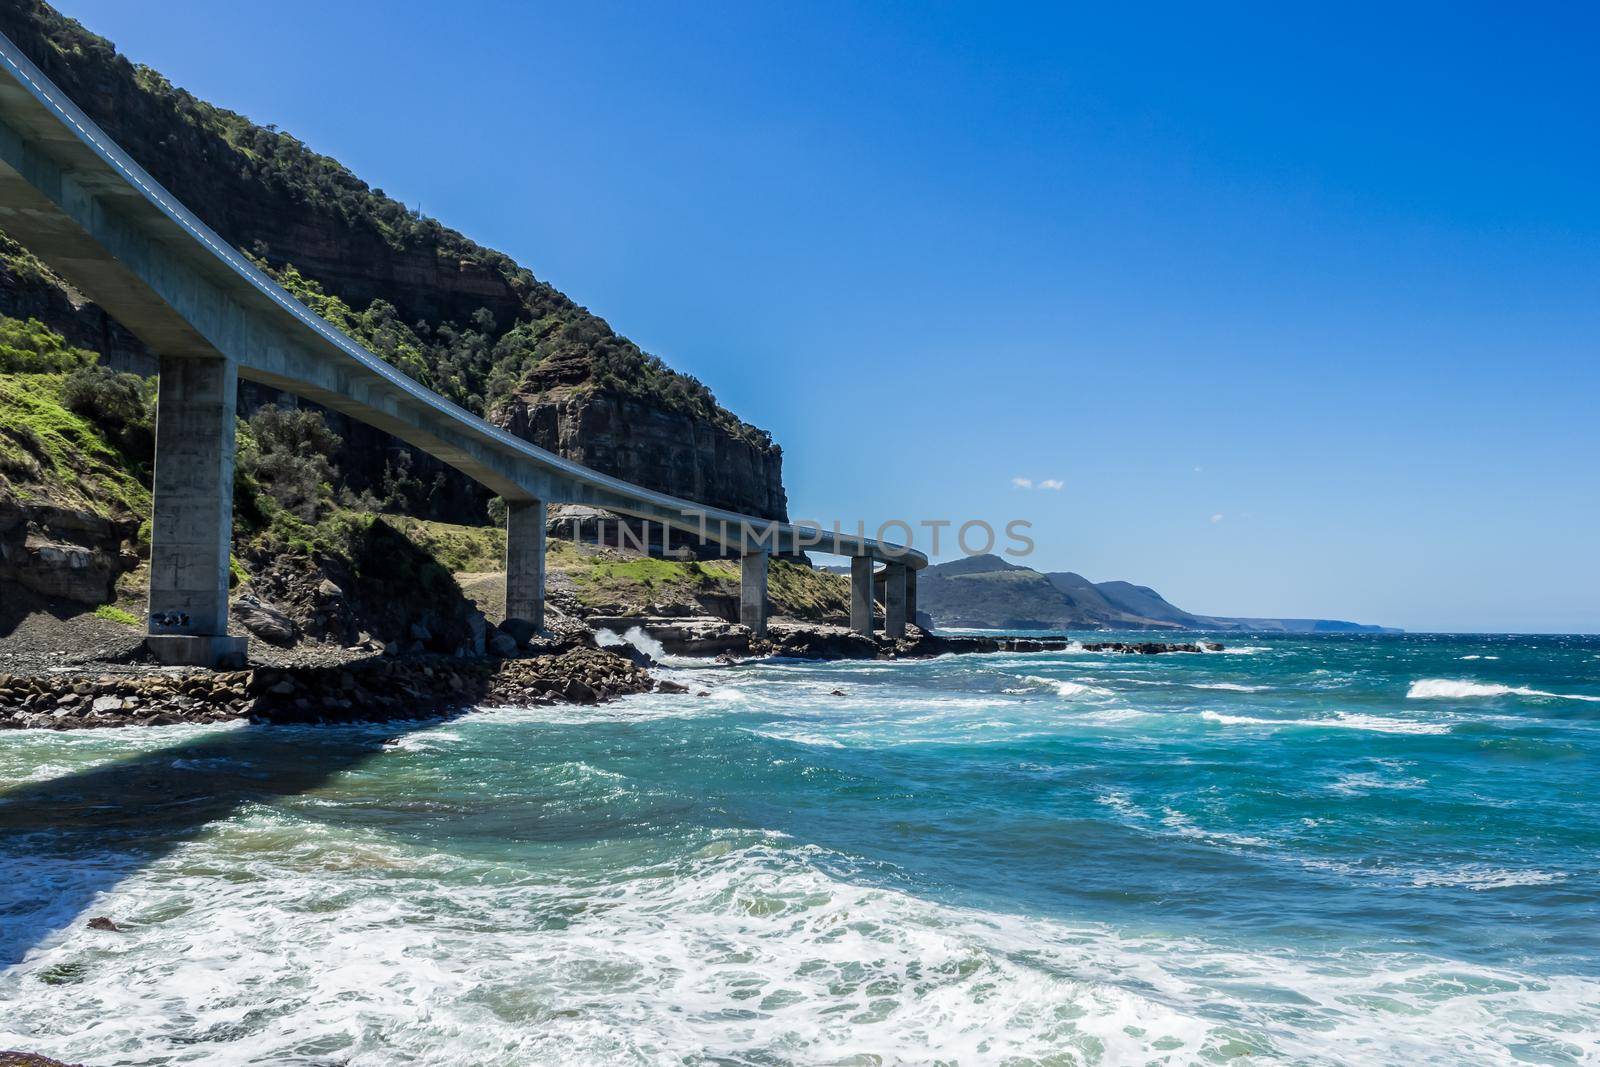 Sea Cliff Bridge along the Grand Pacific Drive, New South Wales, Australia